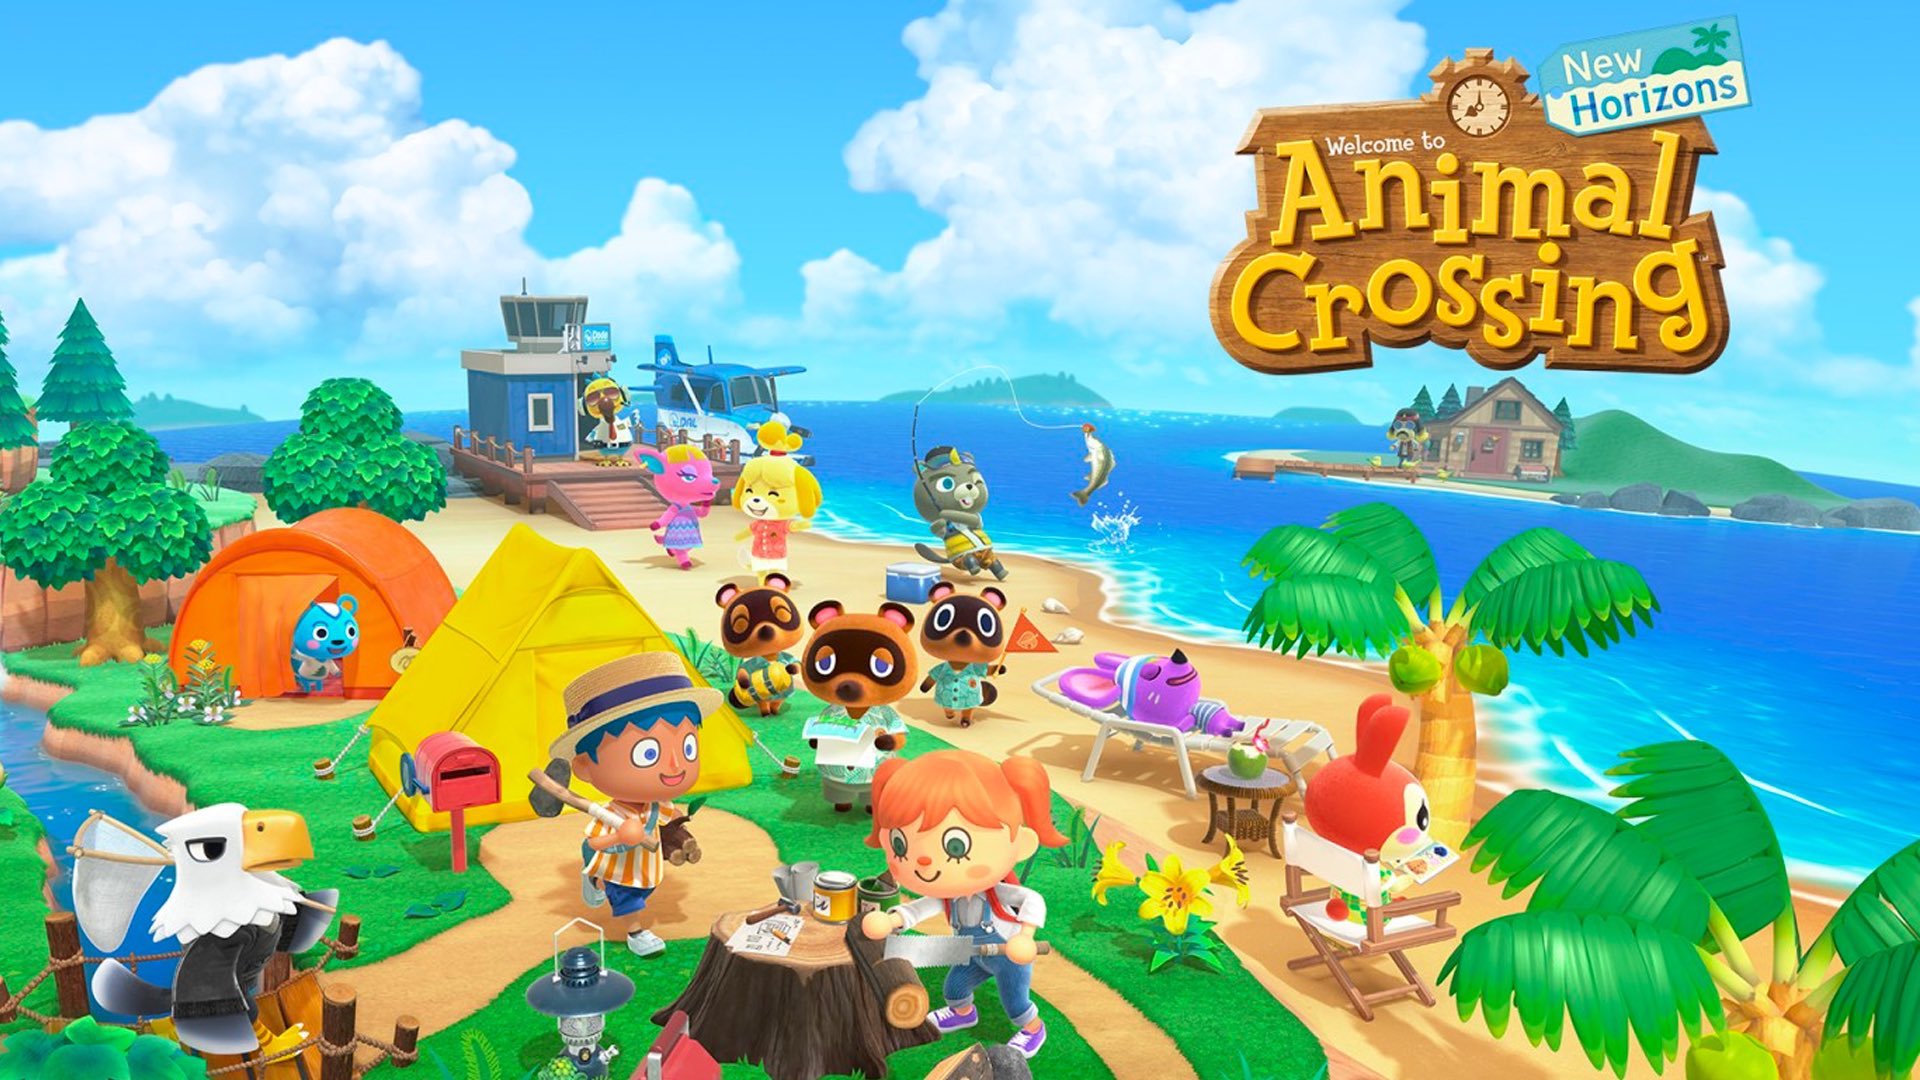 Animal Crossing 2 - Splash screen scene from the popular computer game